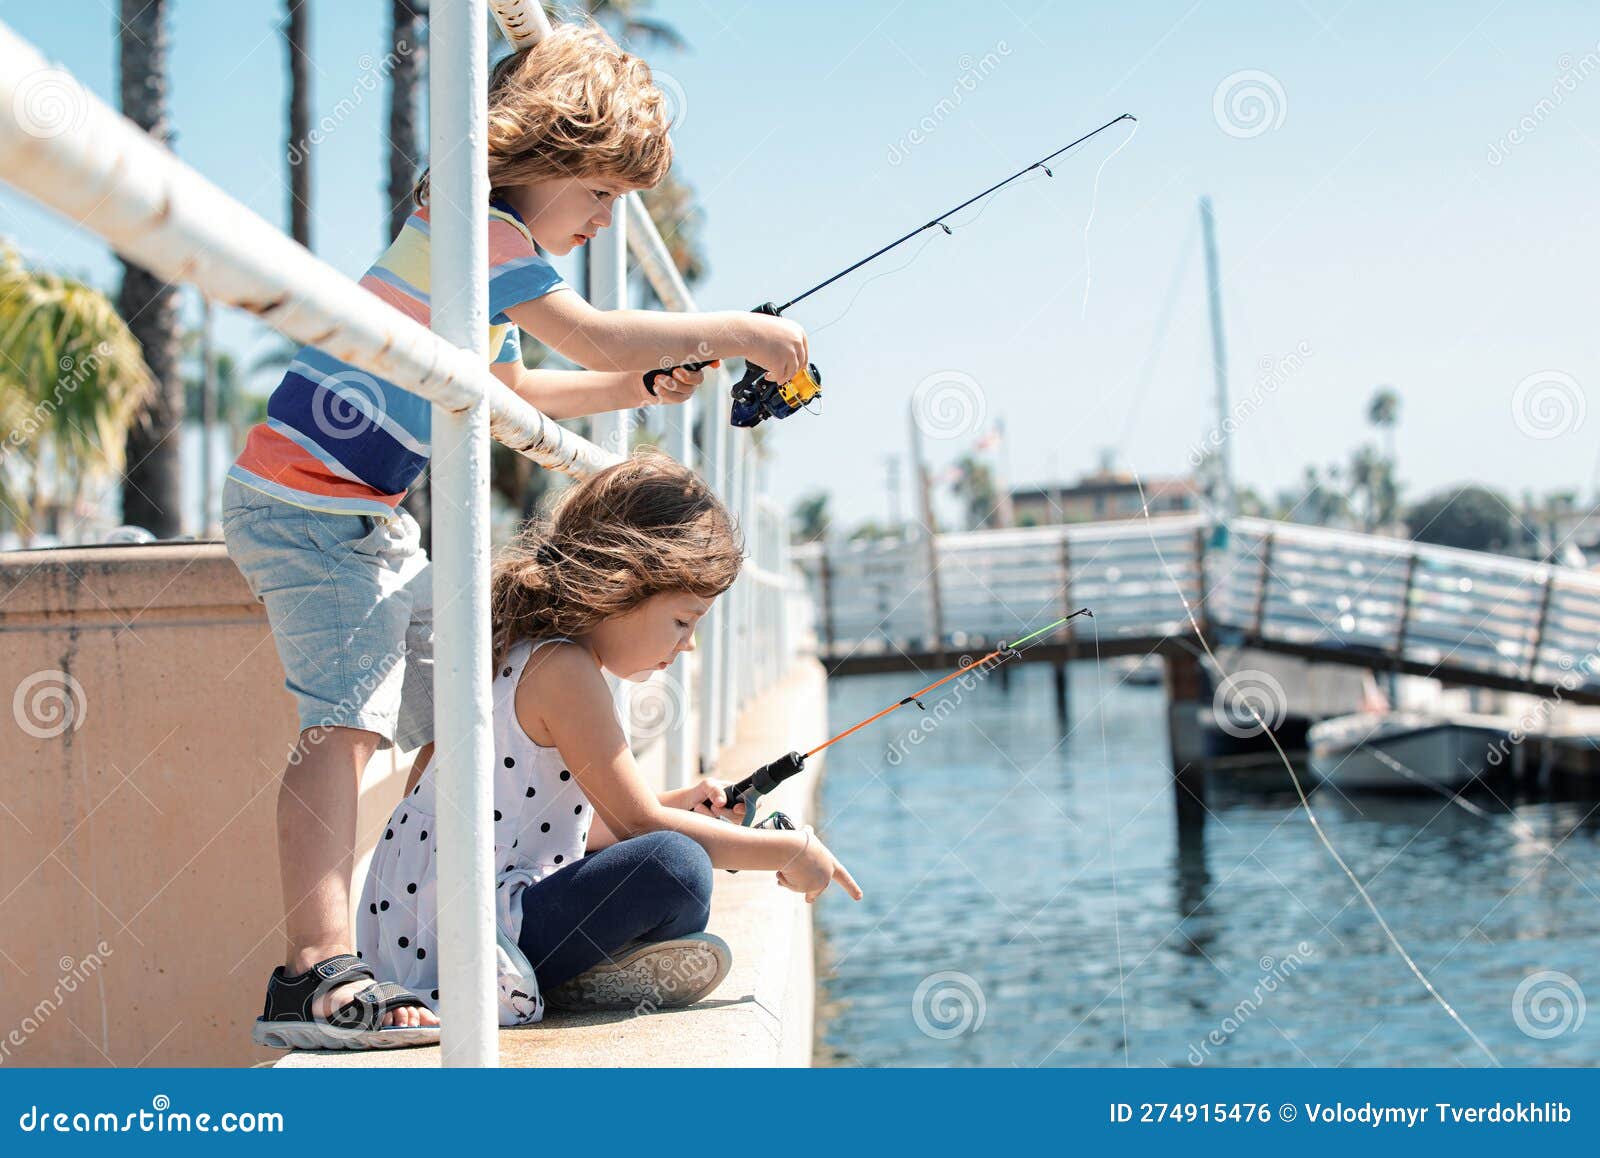 https://thumbs.dreamstime.com/z/couple-kids-fishing-pier-child-jetty-rod-boy-girl-fish-274915476.jpg